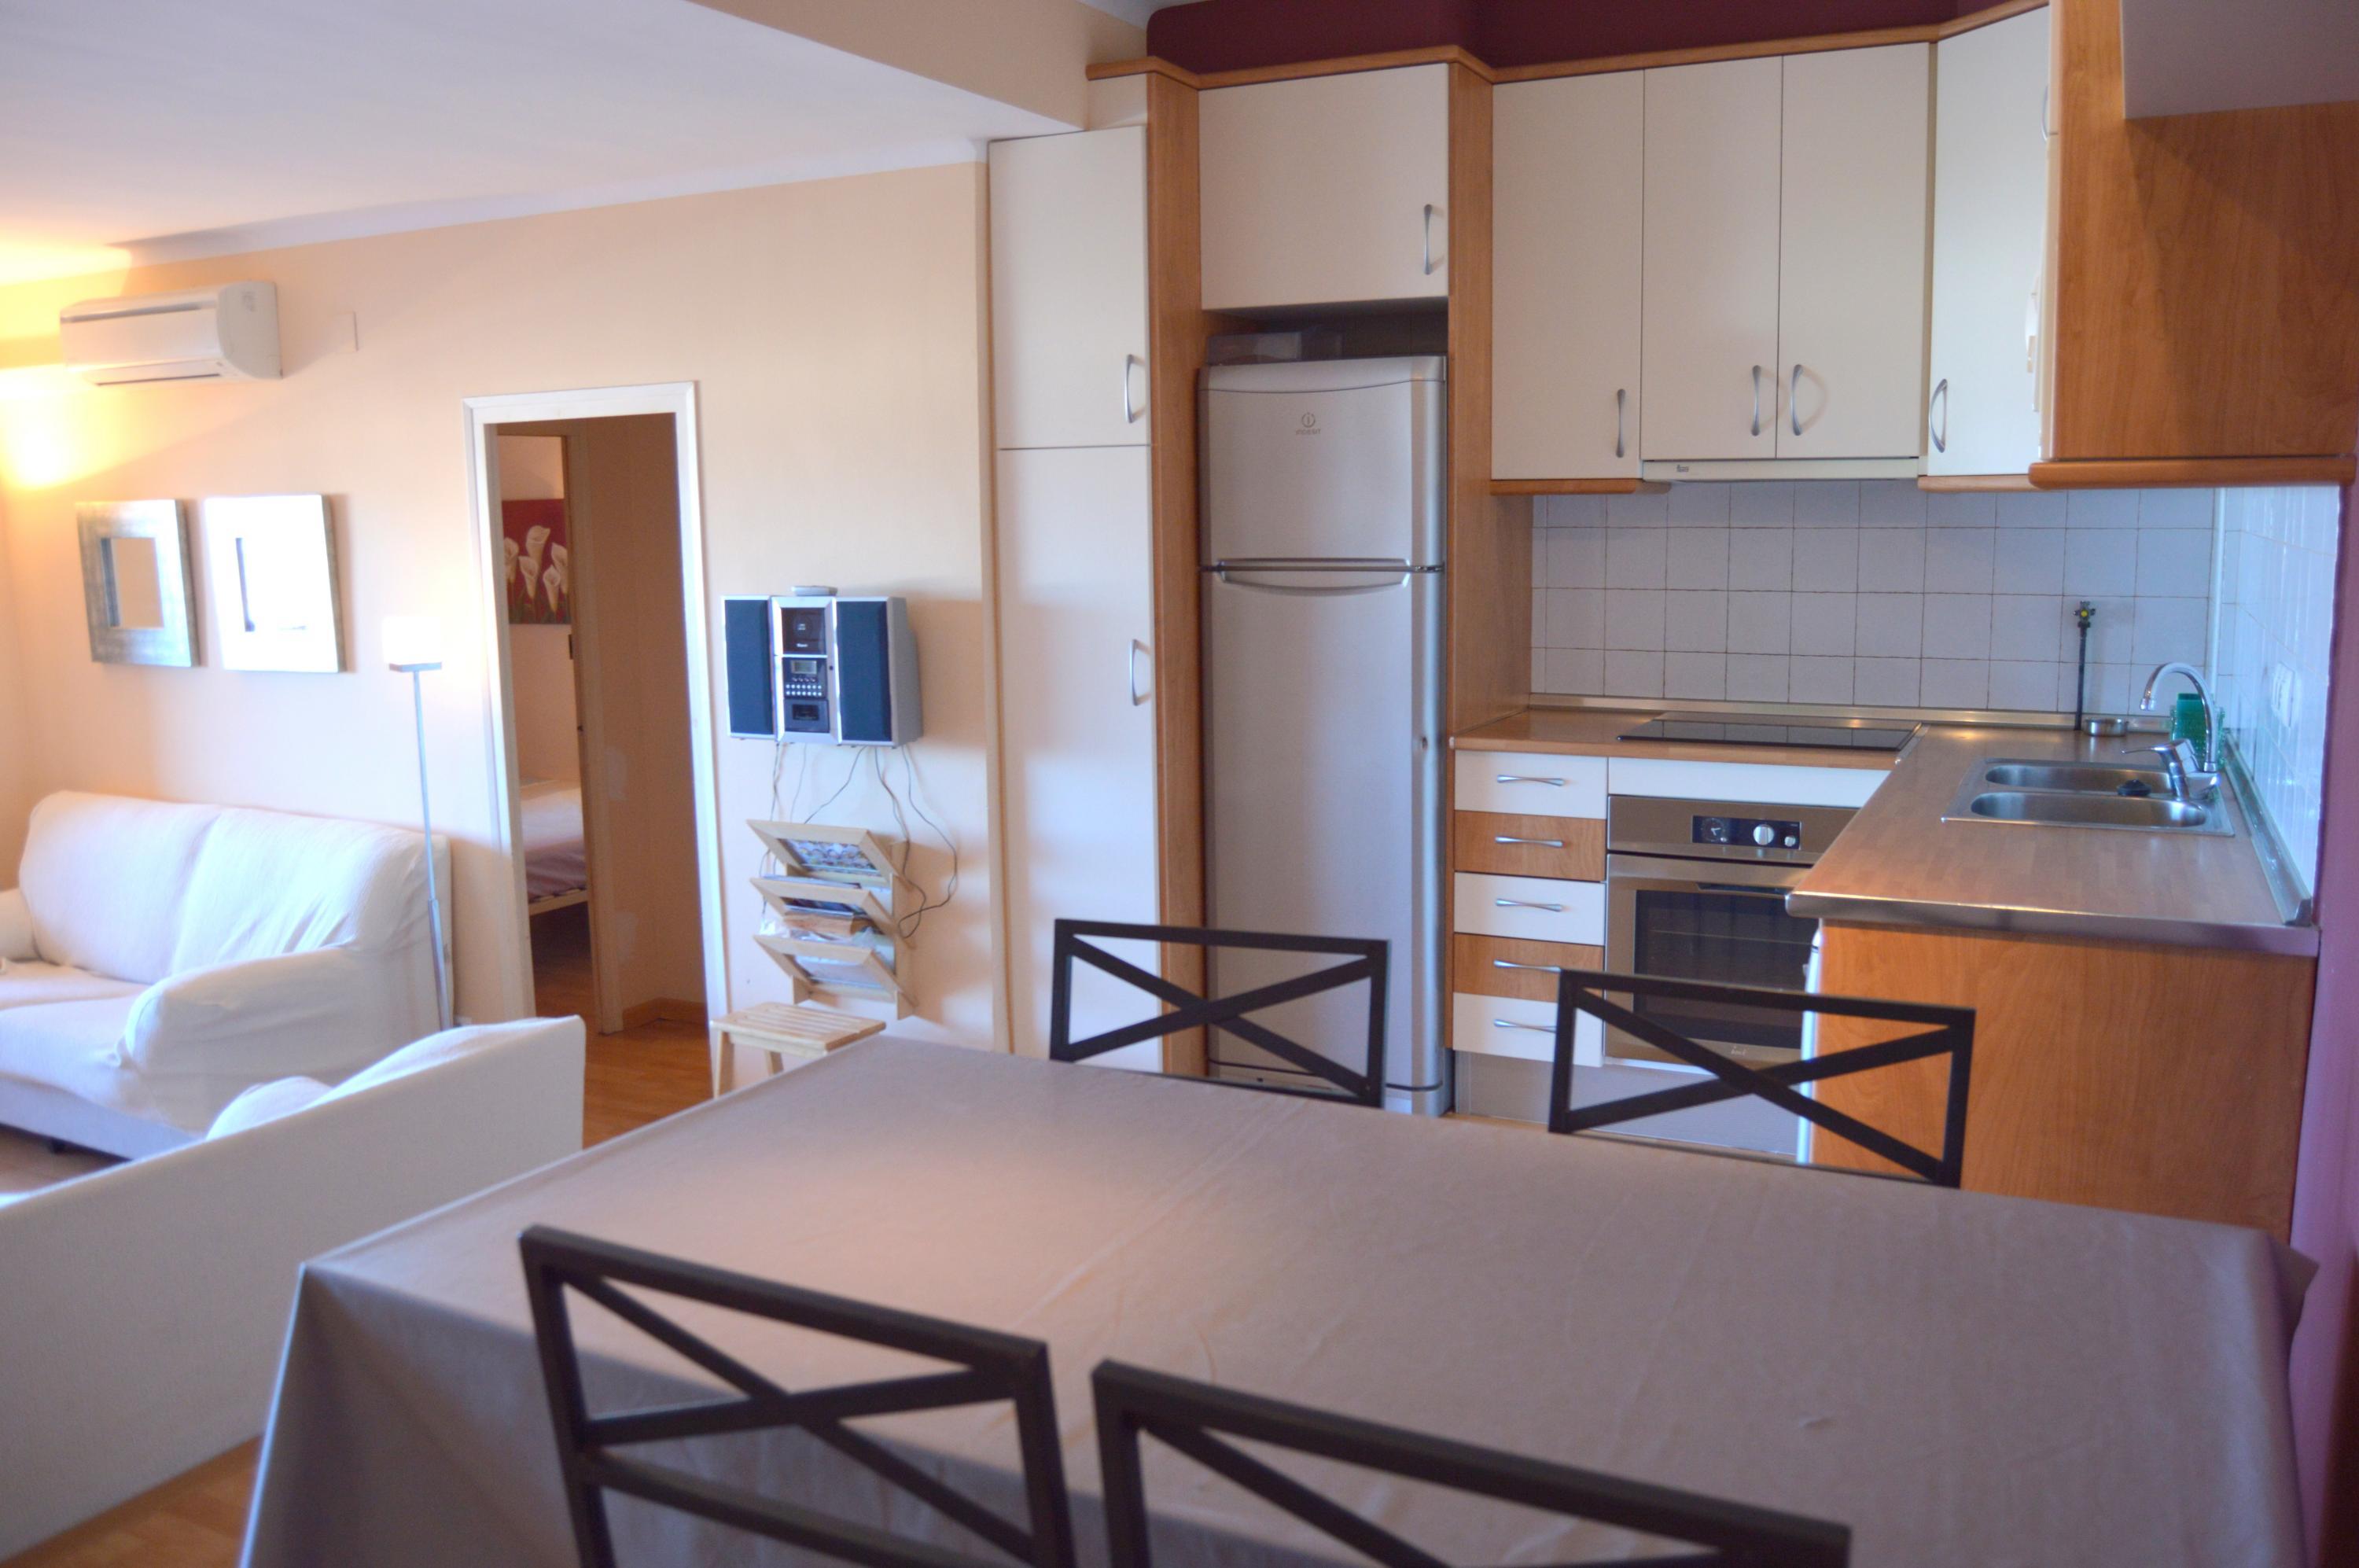 153 Apartamento de 3 dormitorios vistas al mar Piso Gran Reserva Castelló d'Empúries